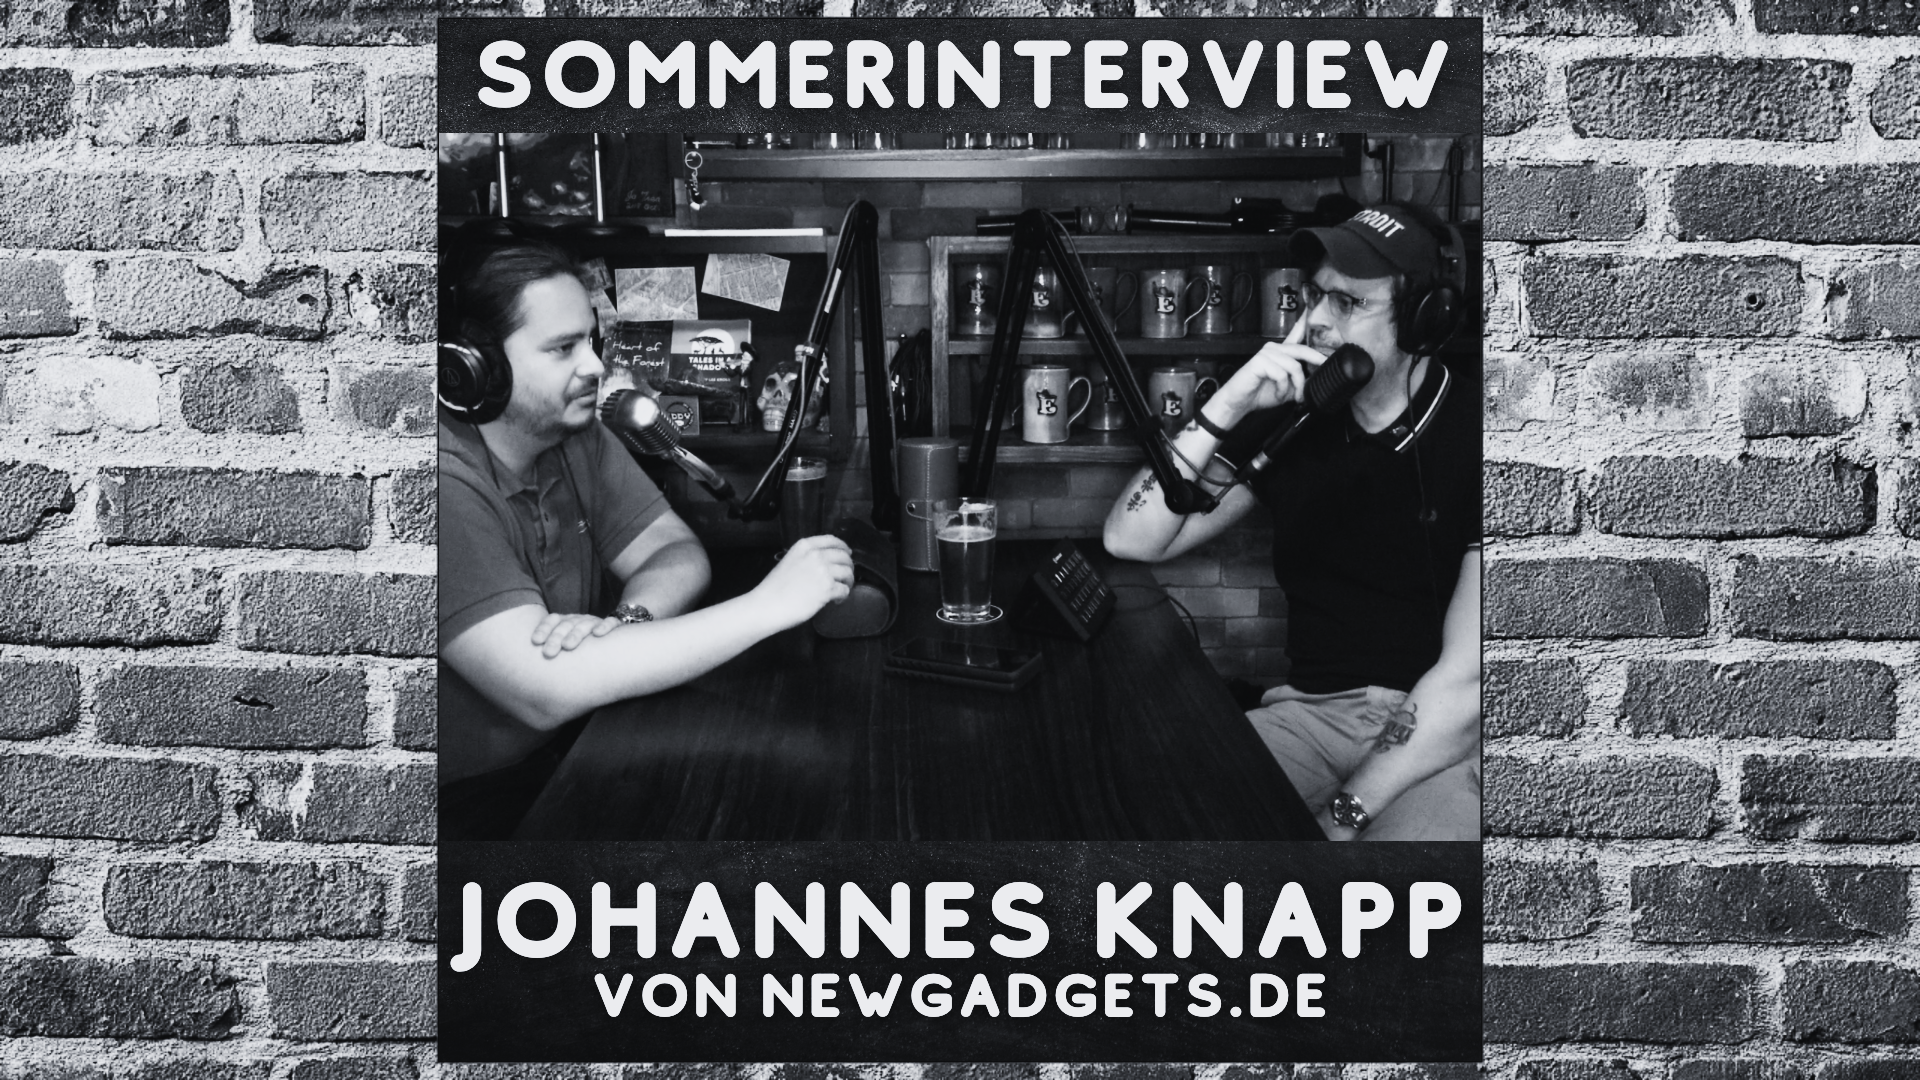 Sommerinterview - Johannes Knapp von Newgadgets.de